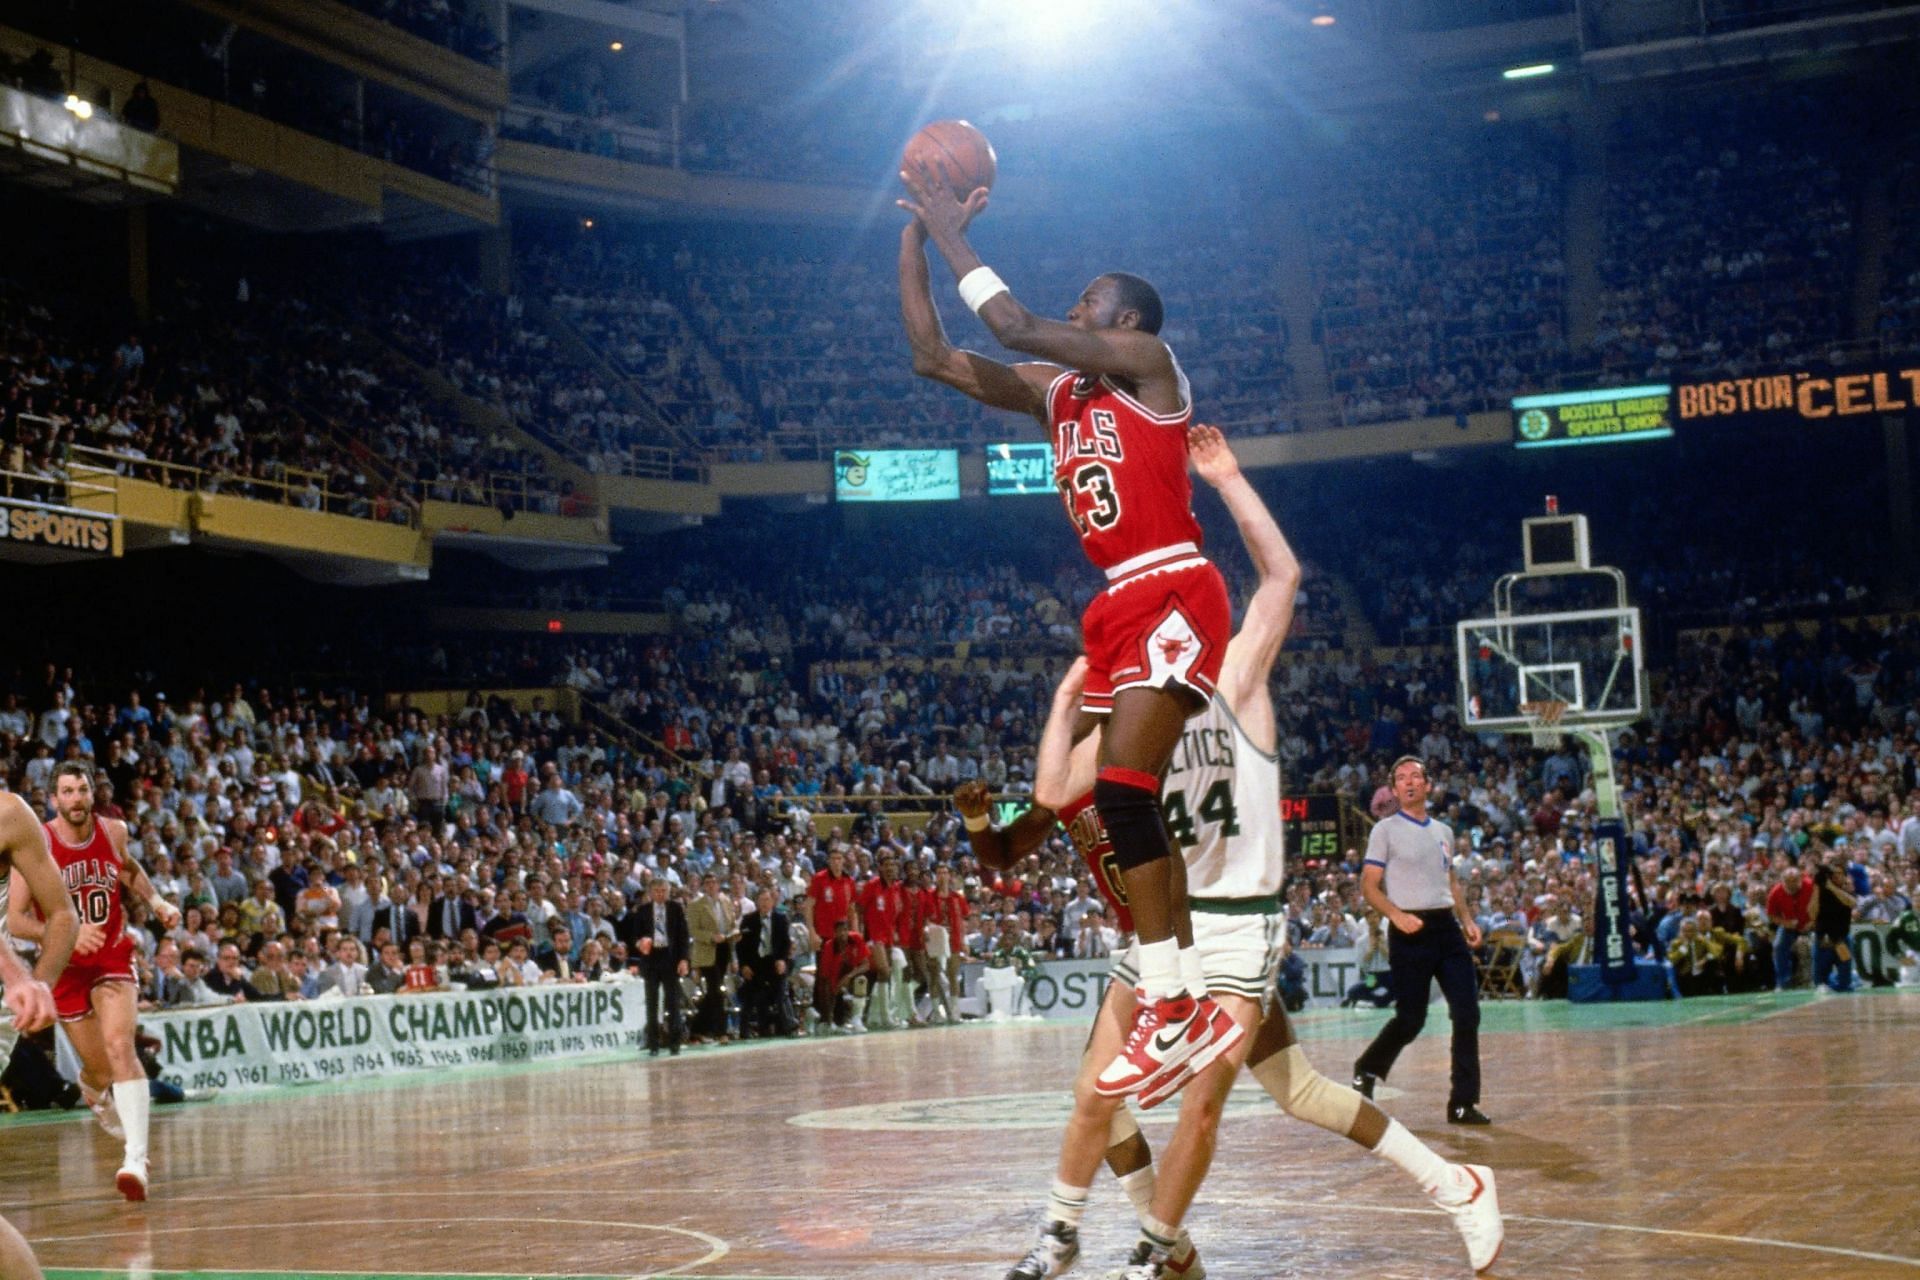 Michael Jordan against the Boston Celtics